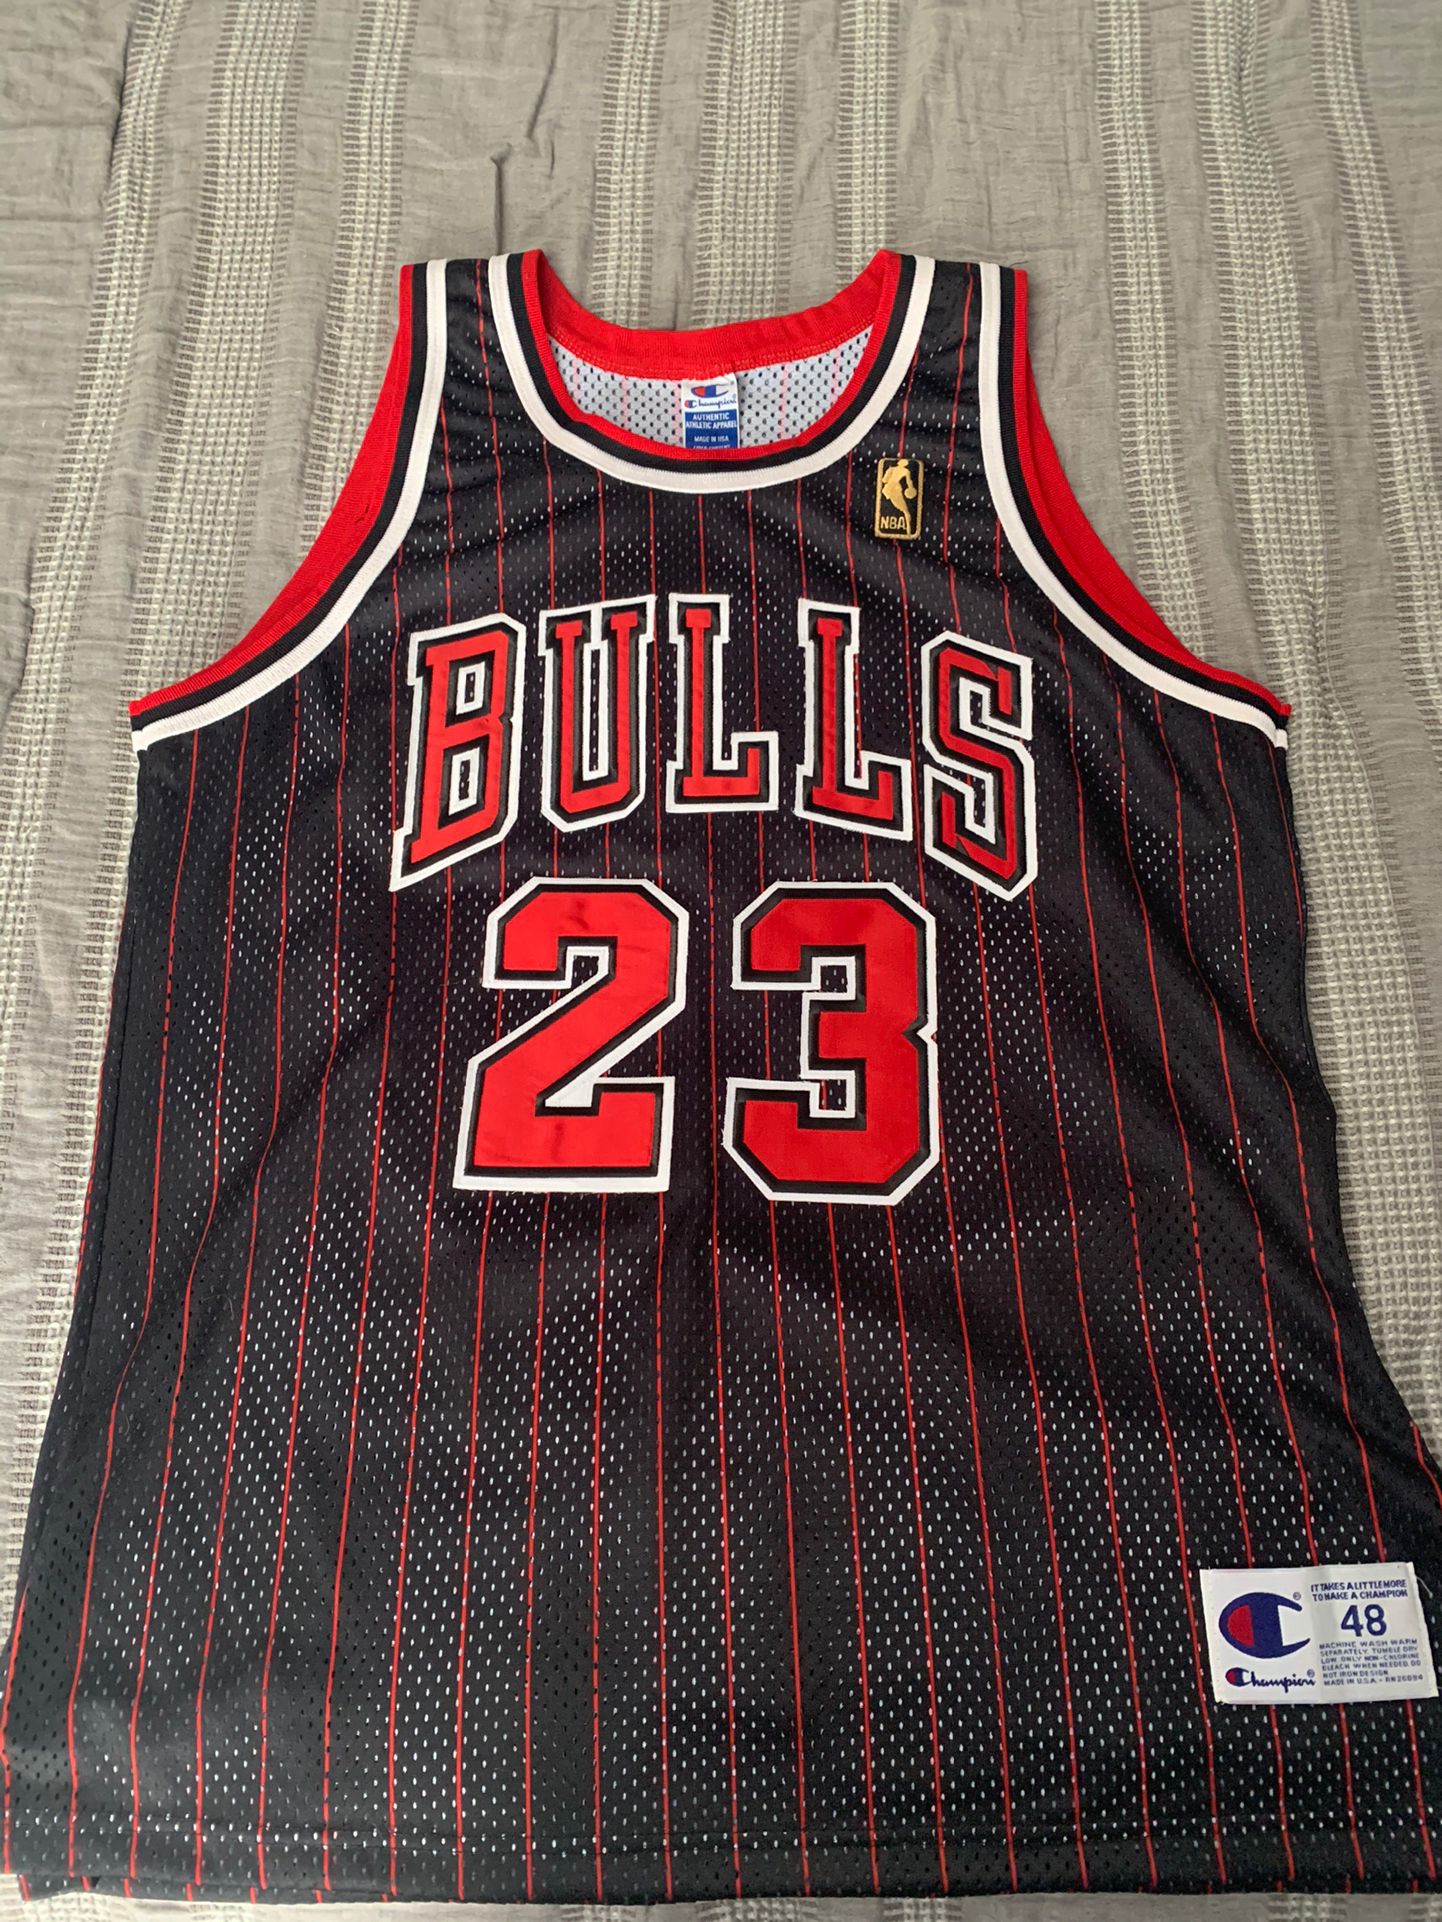 Michael Jordan Bulls Pinstripe Jersey - M – Picked